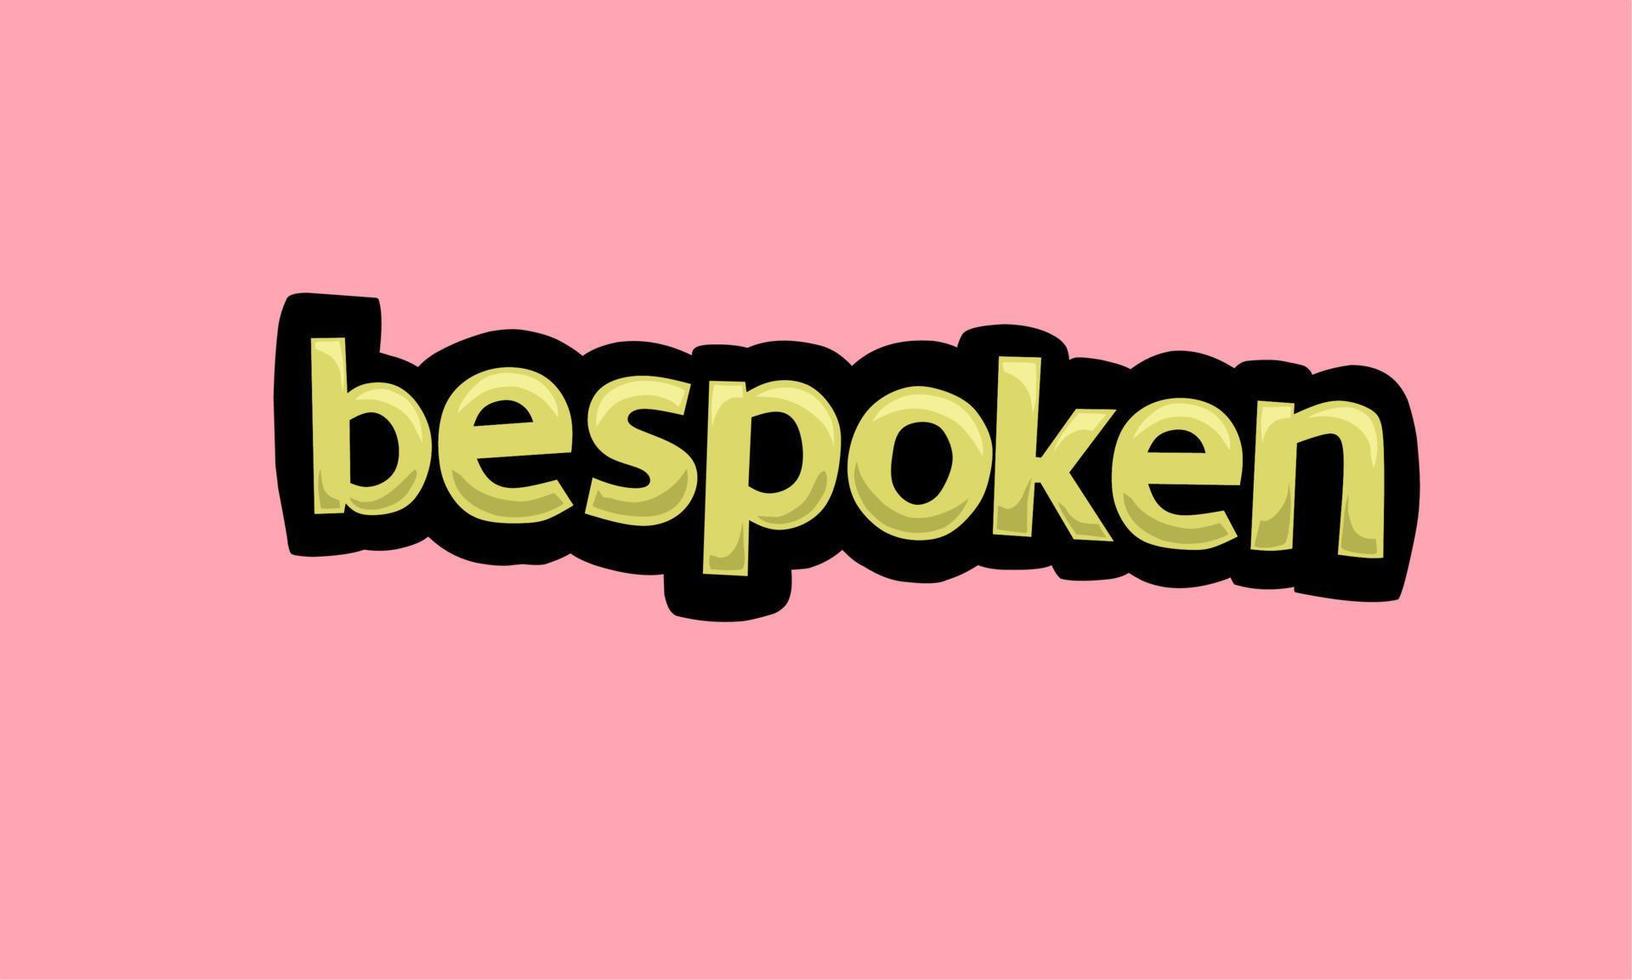 bespoken writing vector design on a pink background